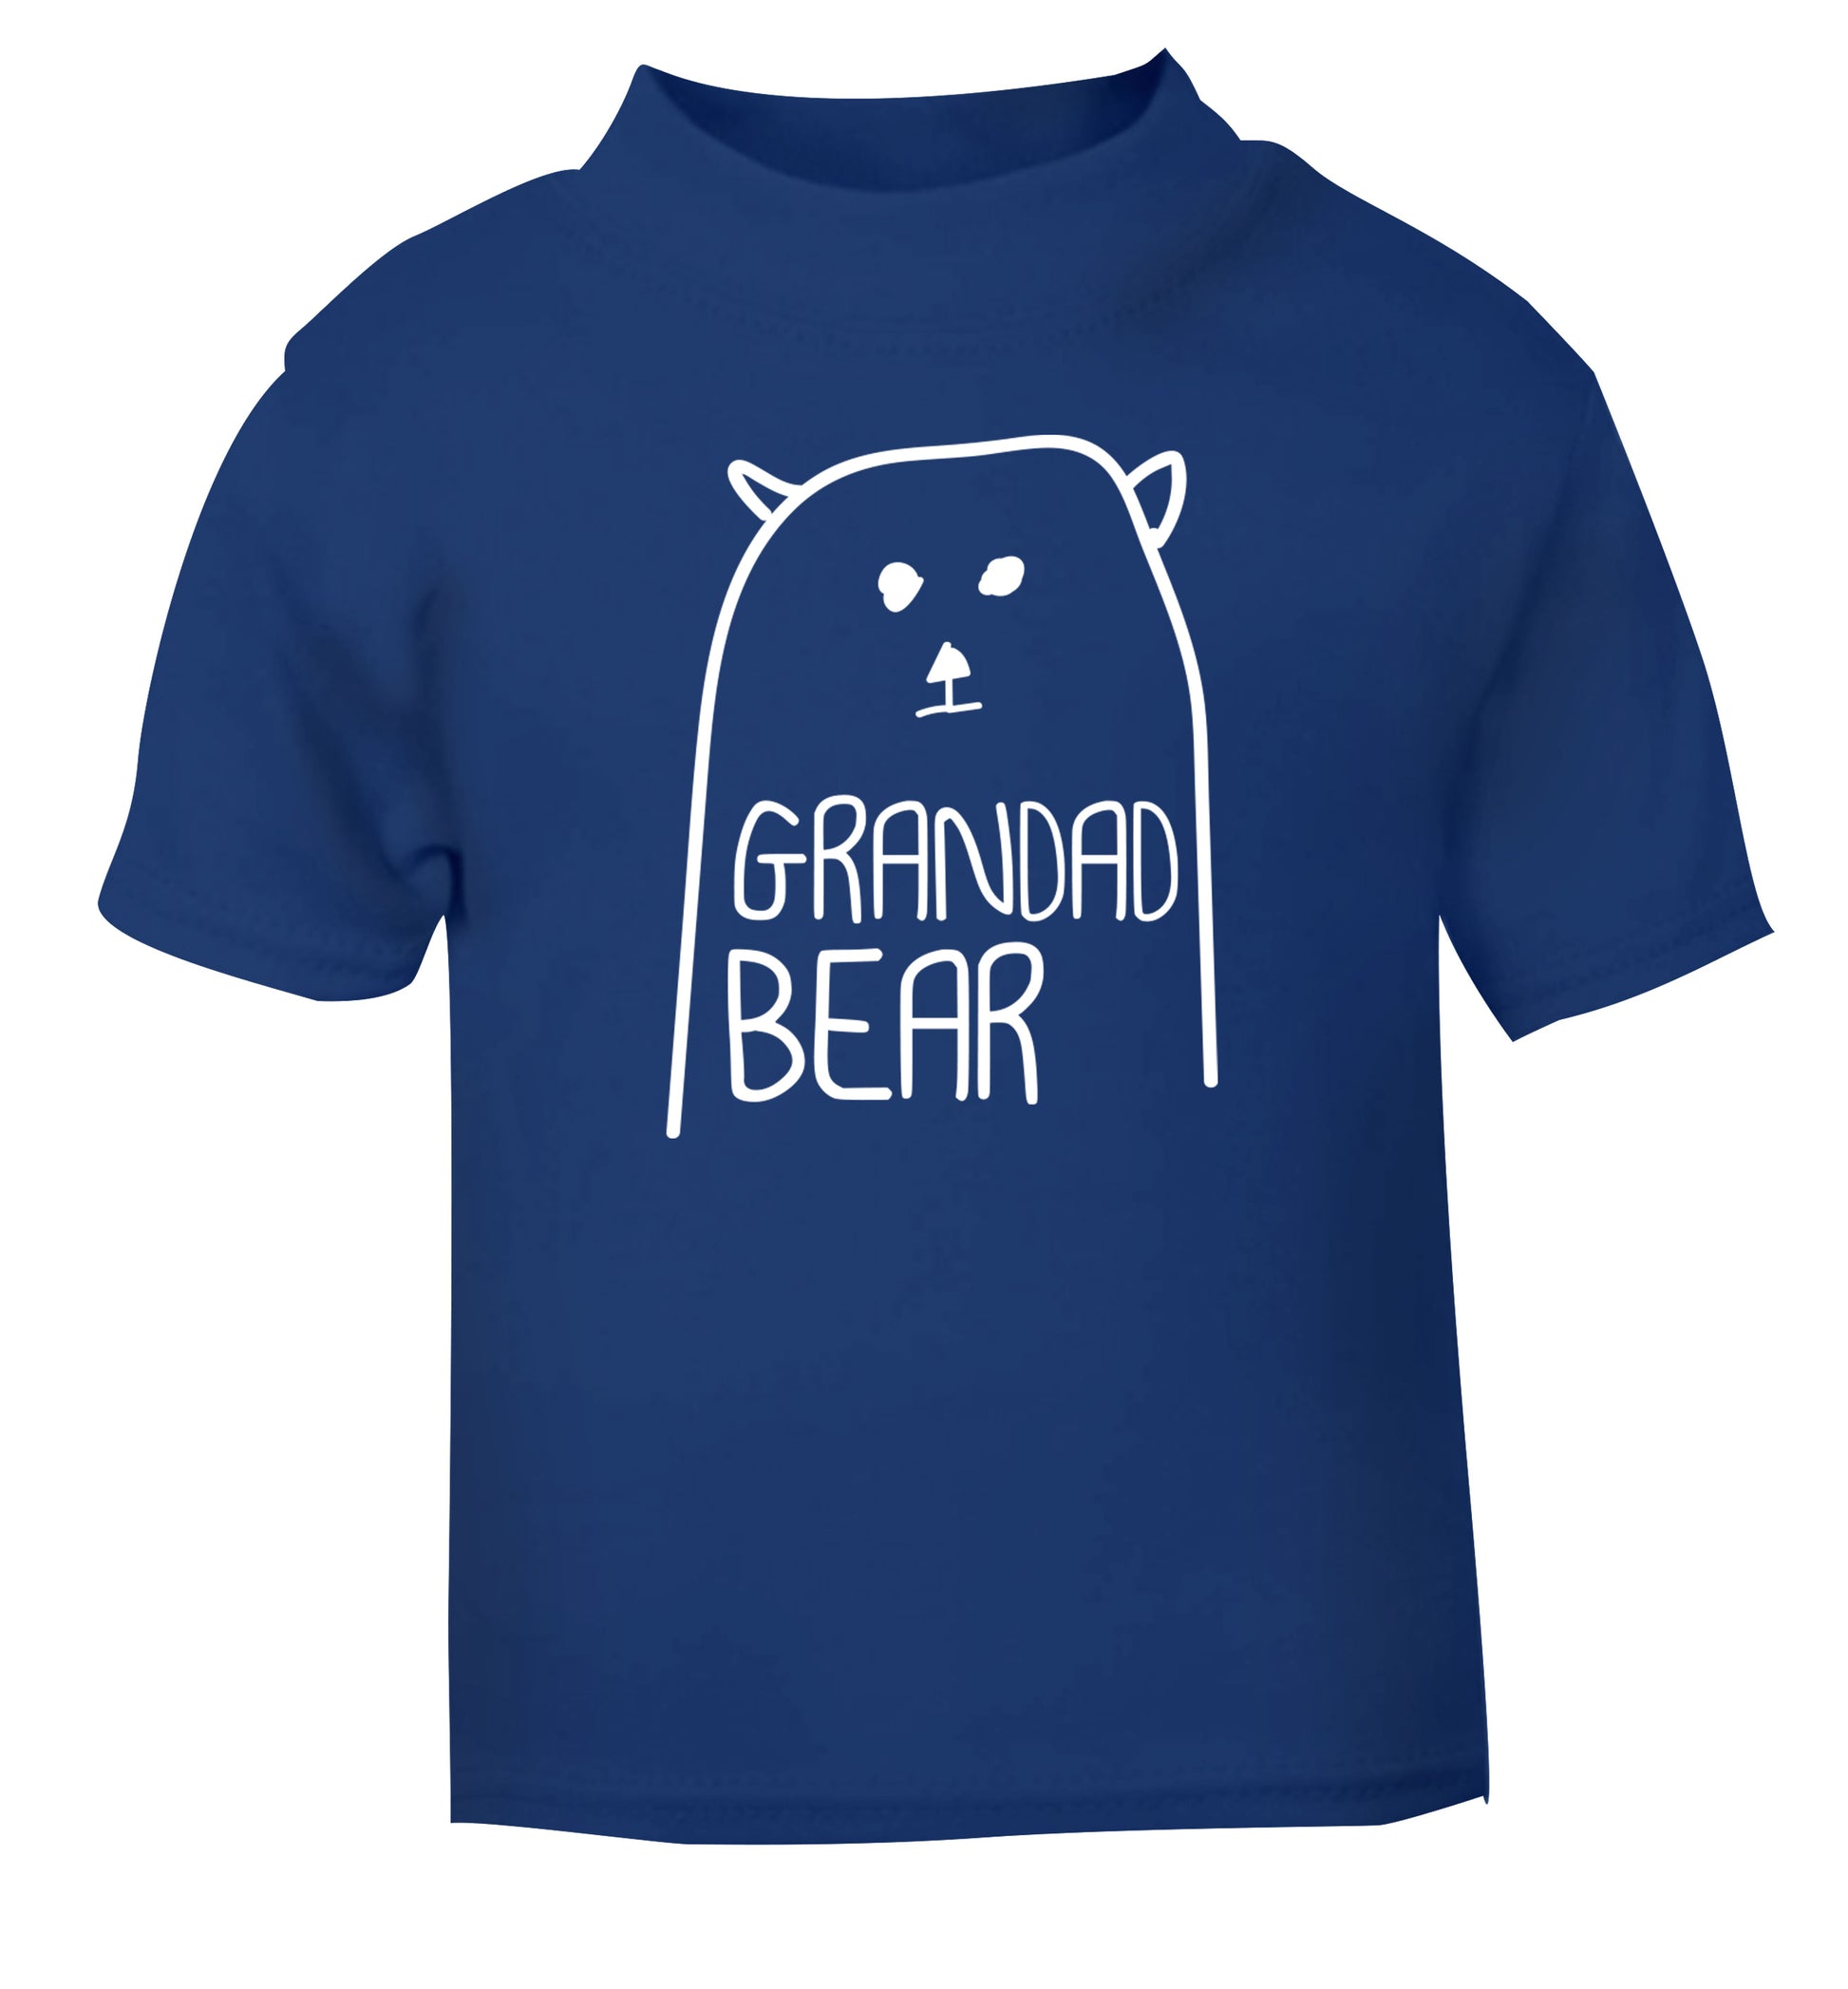 Grandad bear blue Baby Toddler Tshirt 2 Years